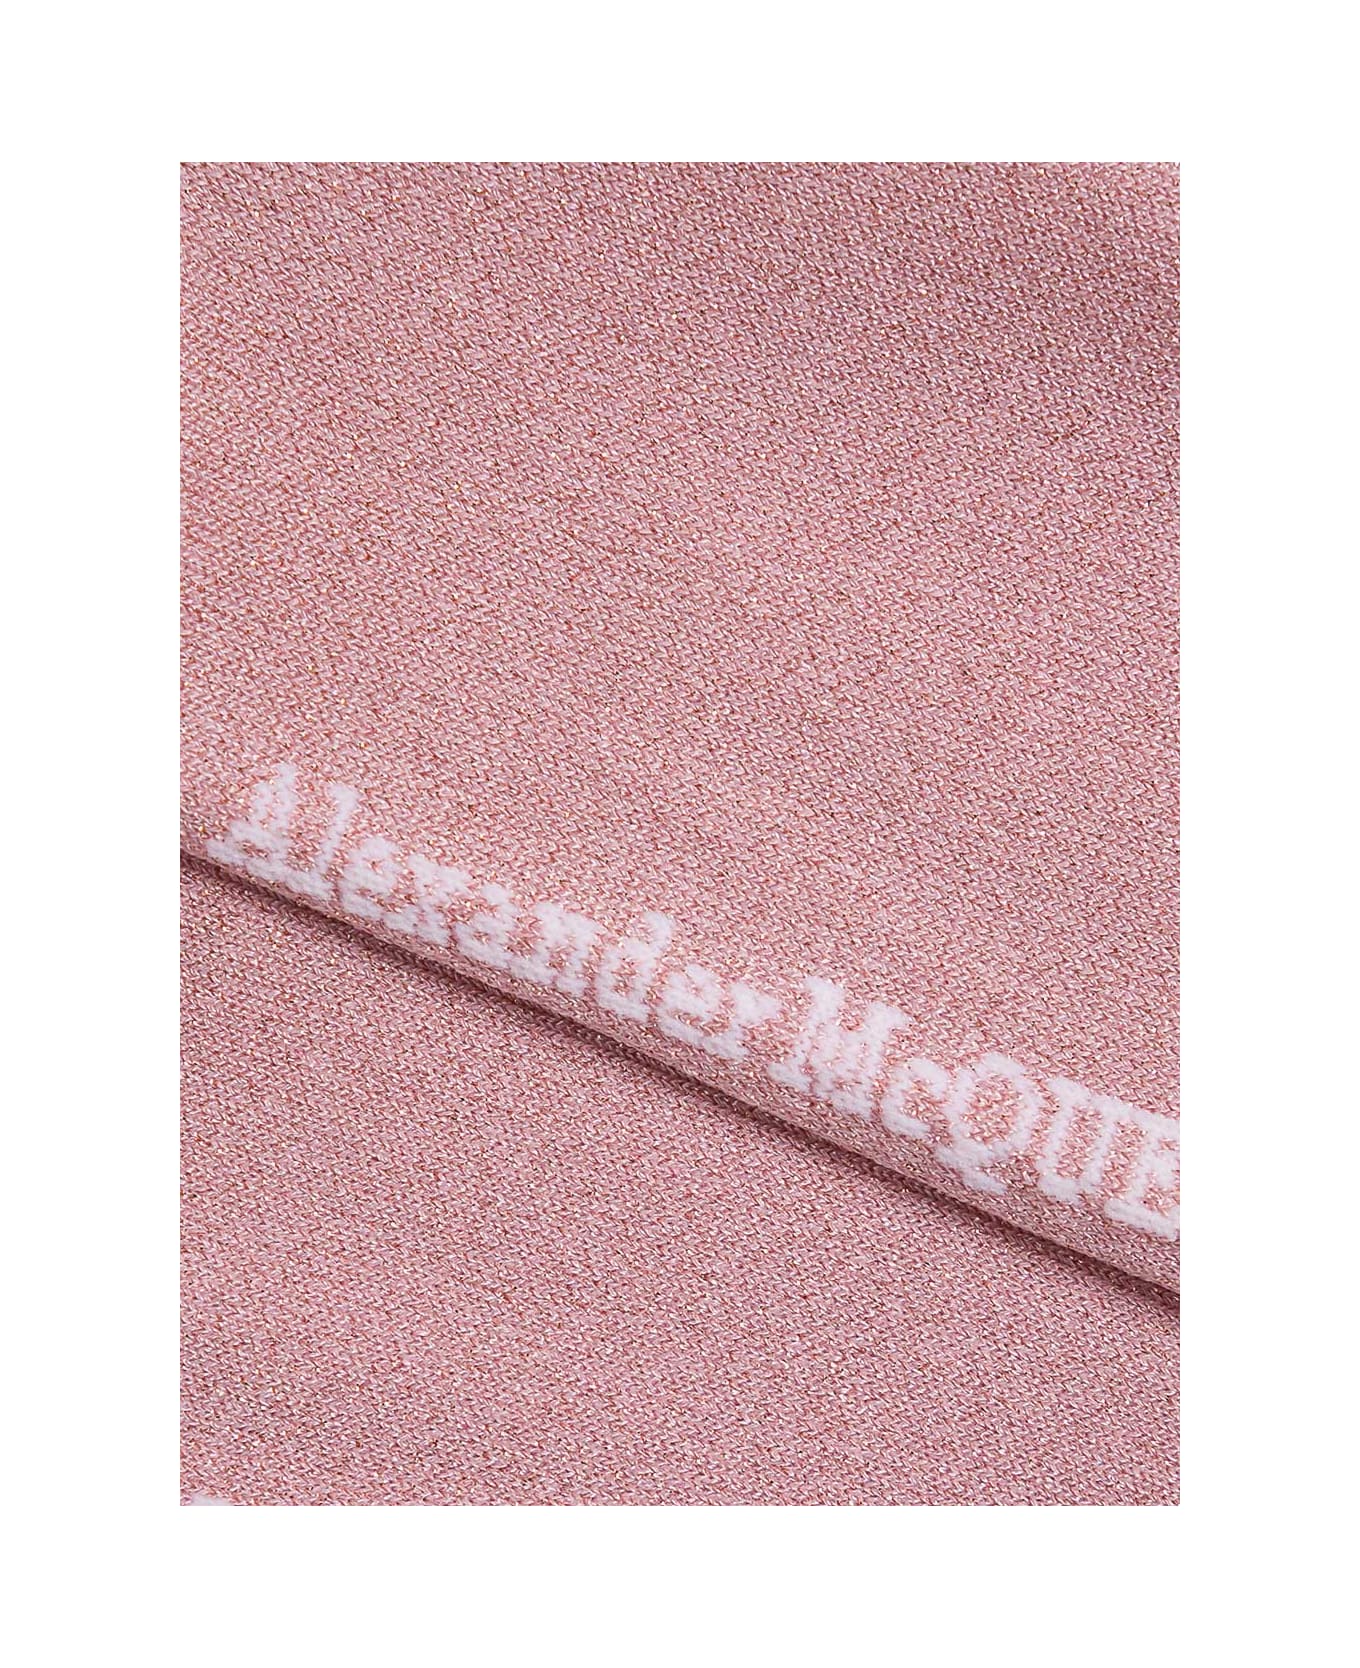 Alexander McQueen Pink Lurex Socks With Logo Print - Pink